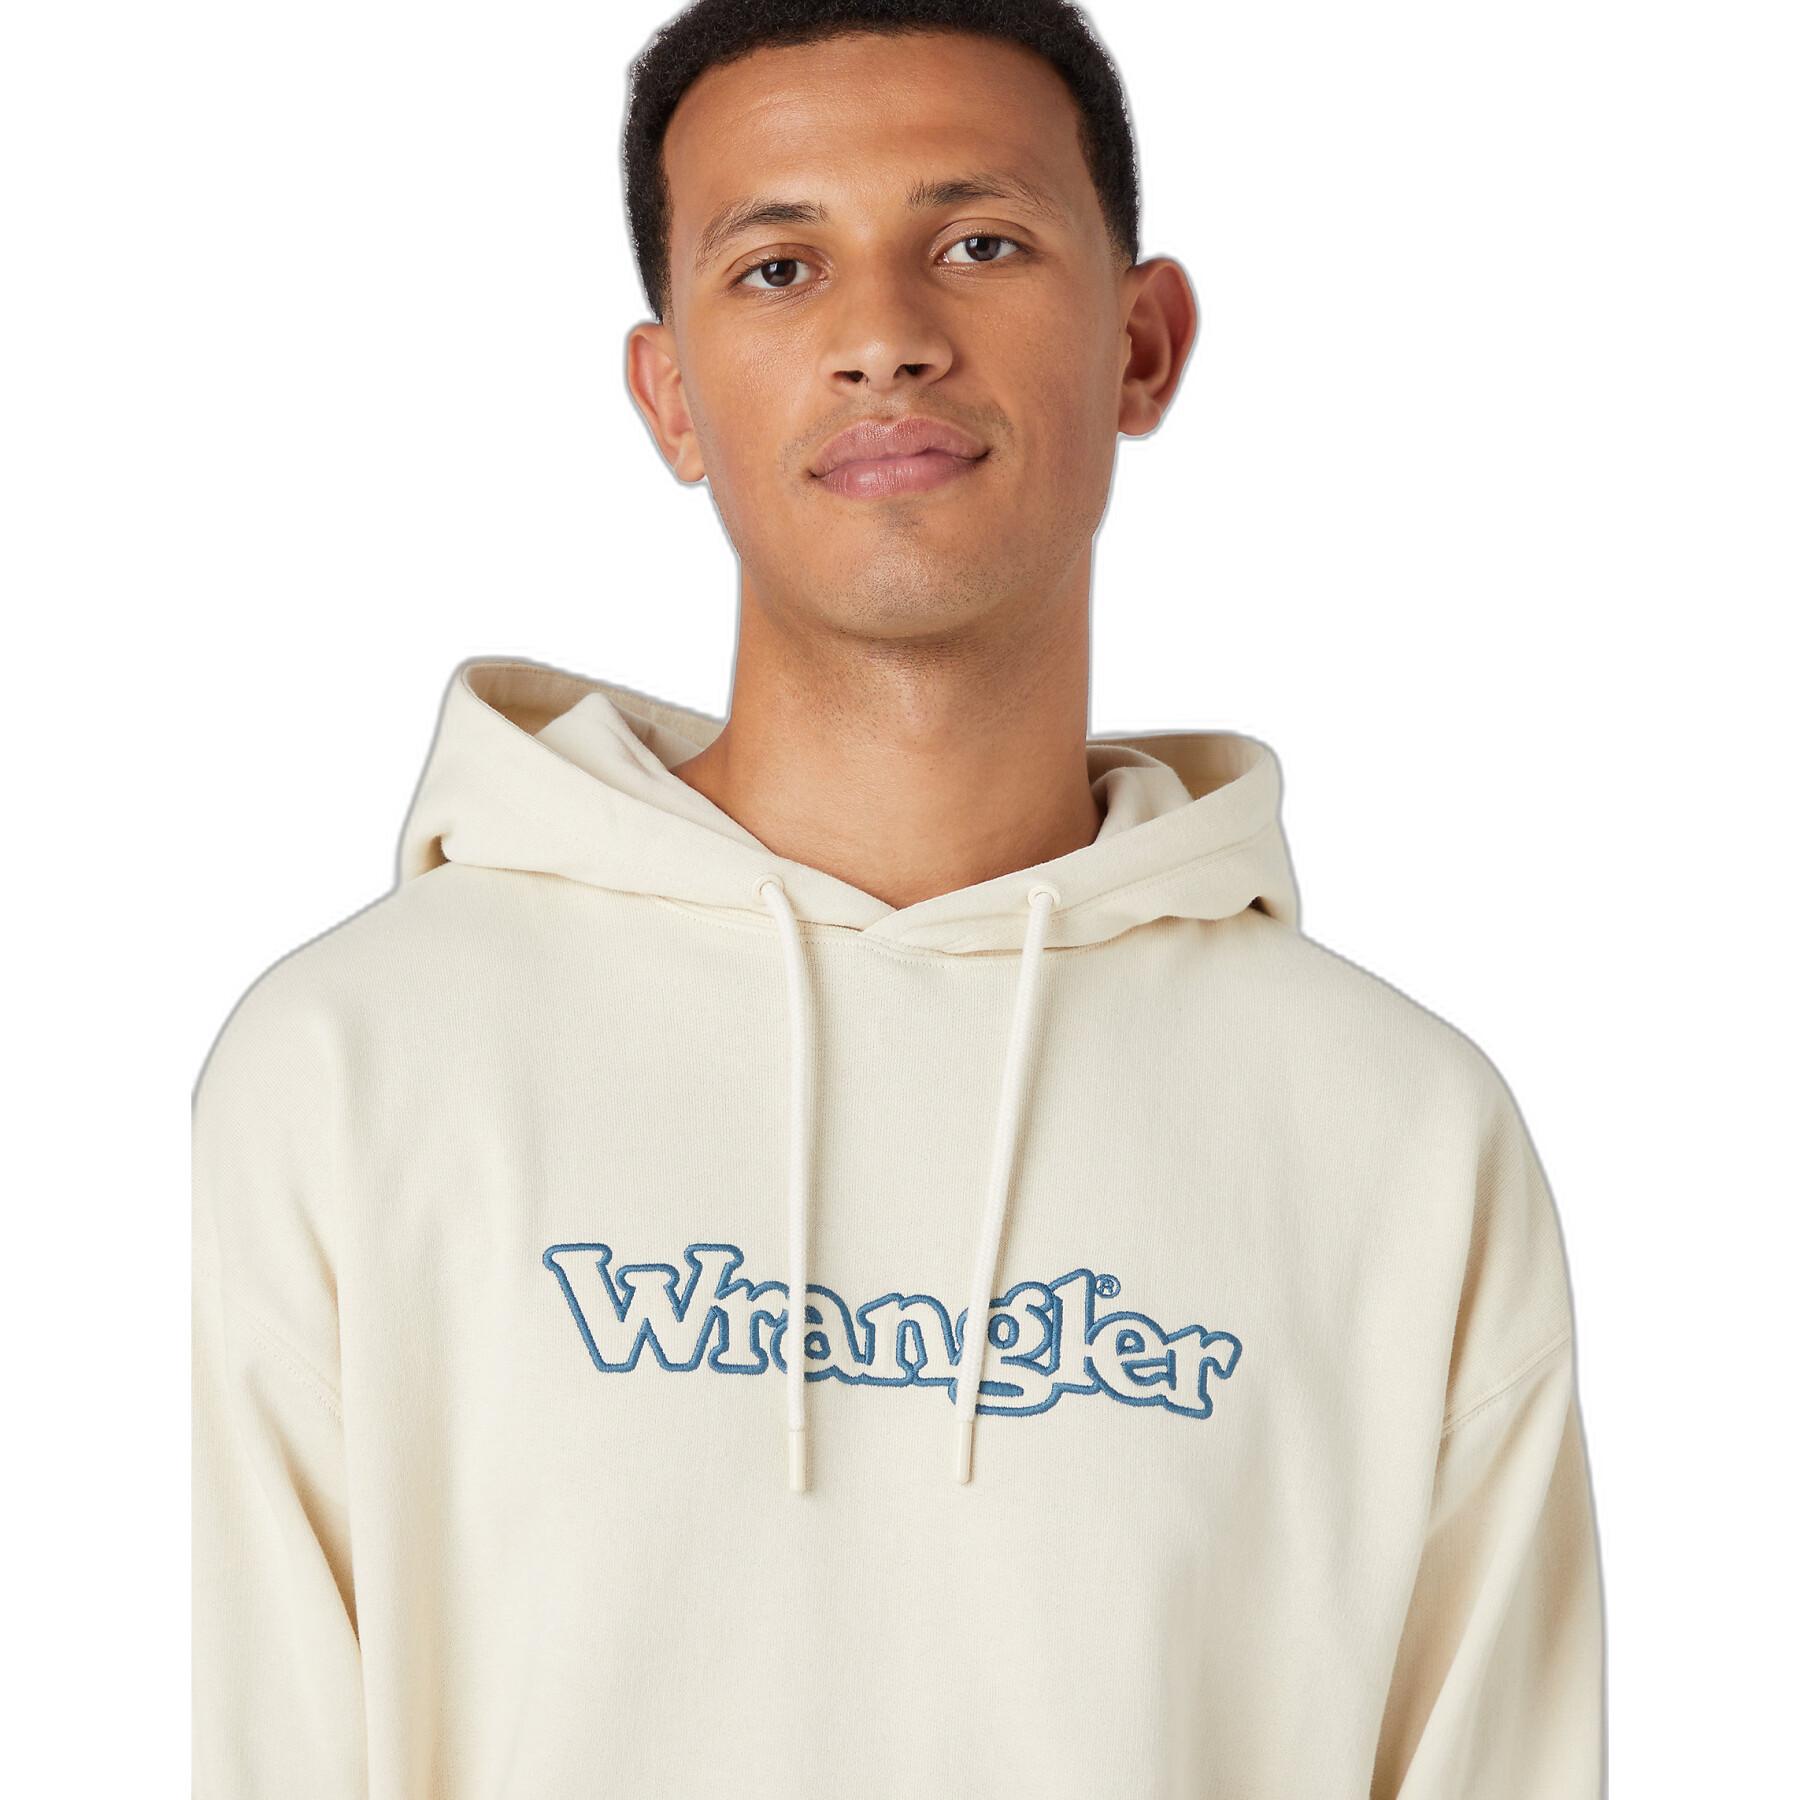 Sweatshirt con capucha Wrangler Graphic